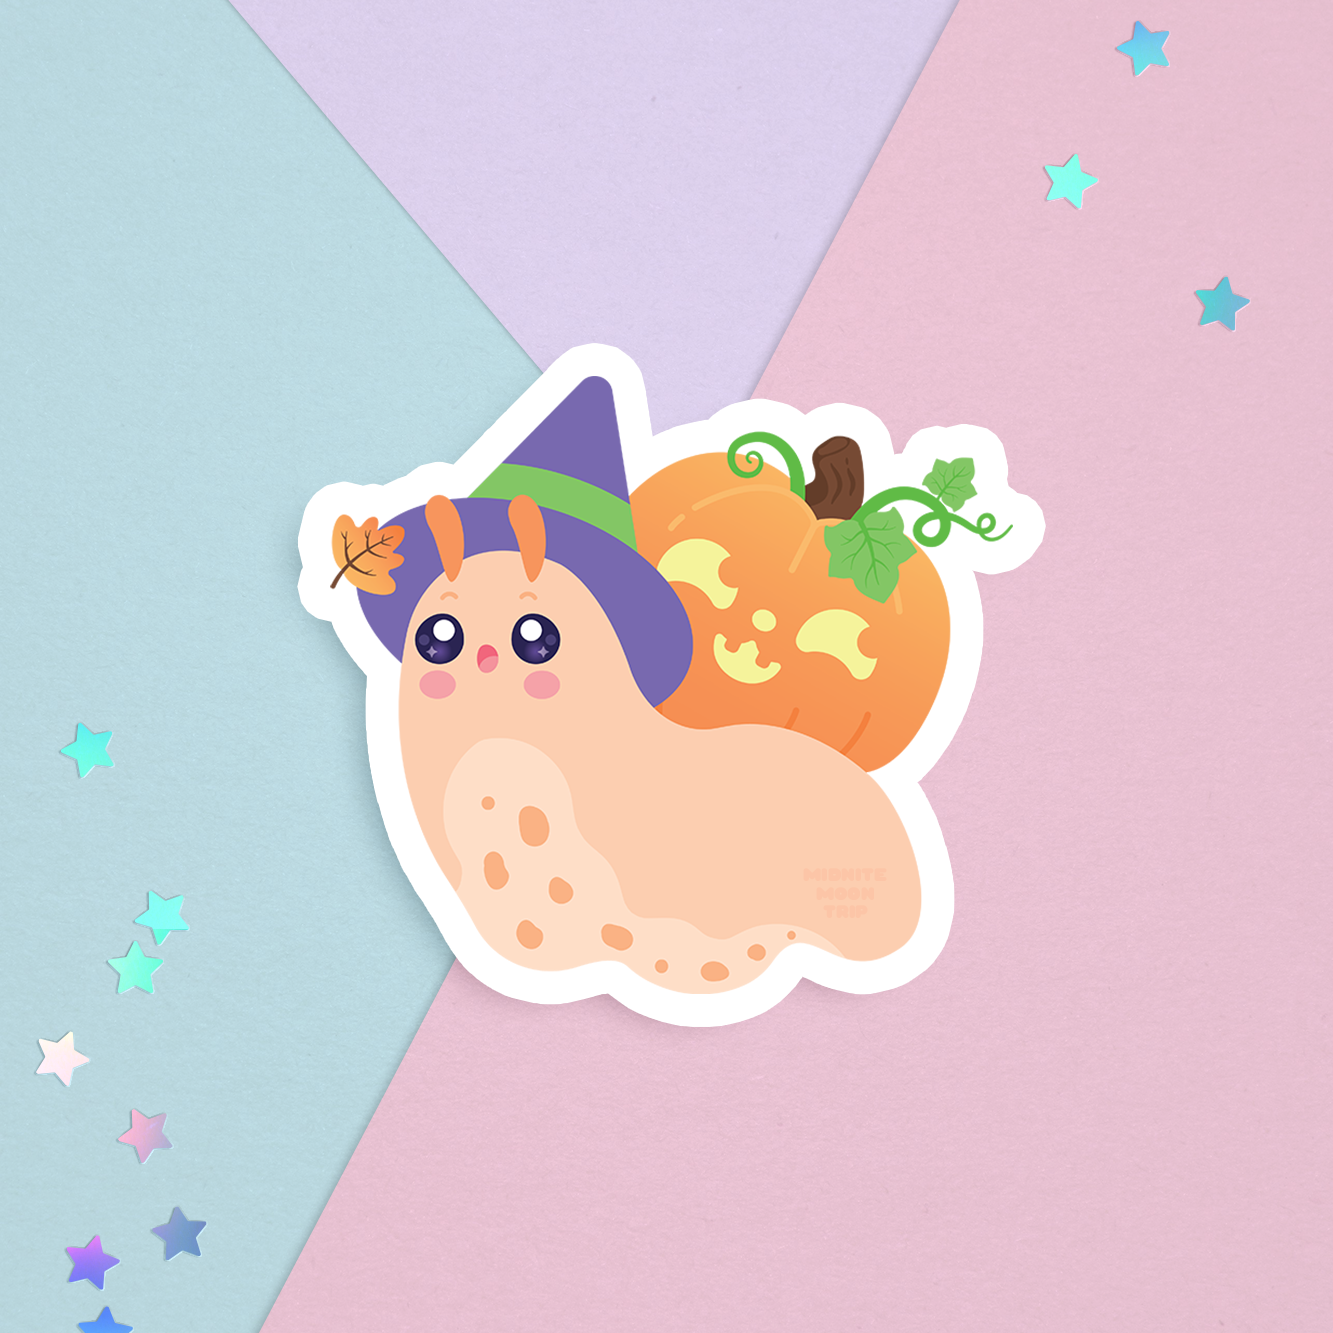 sticker of kawaii cute halloween snail with a jack-o-lantern pumpkin shell and a purple witch hat